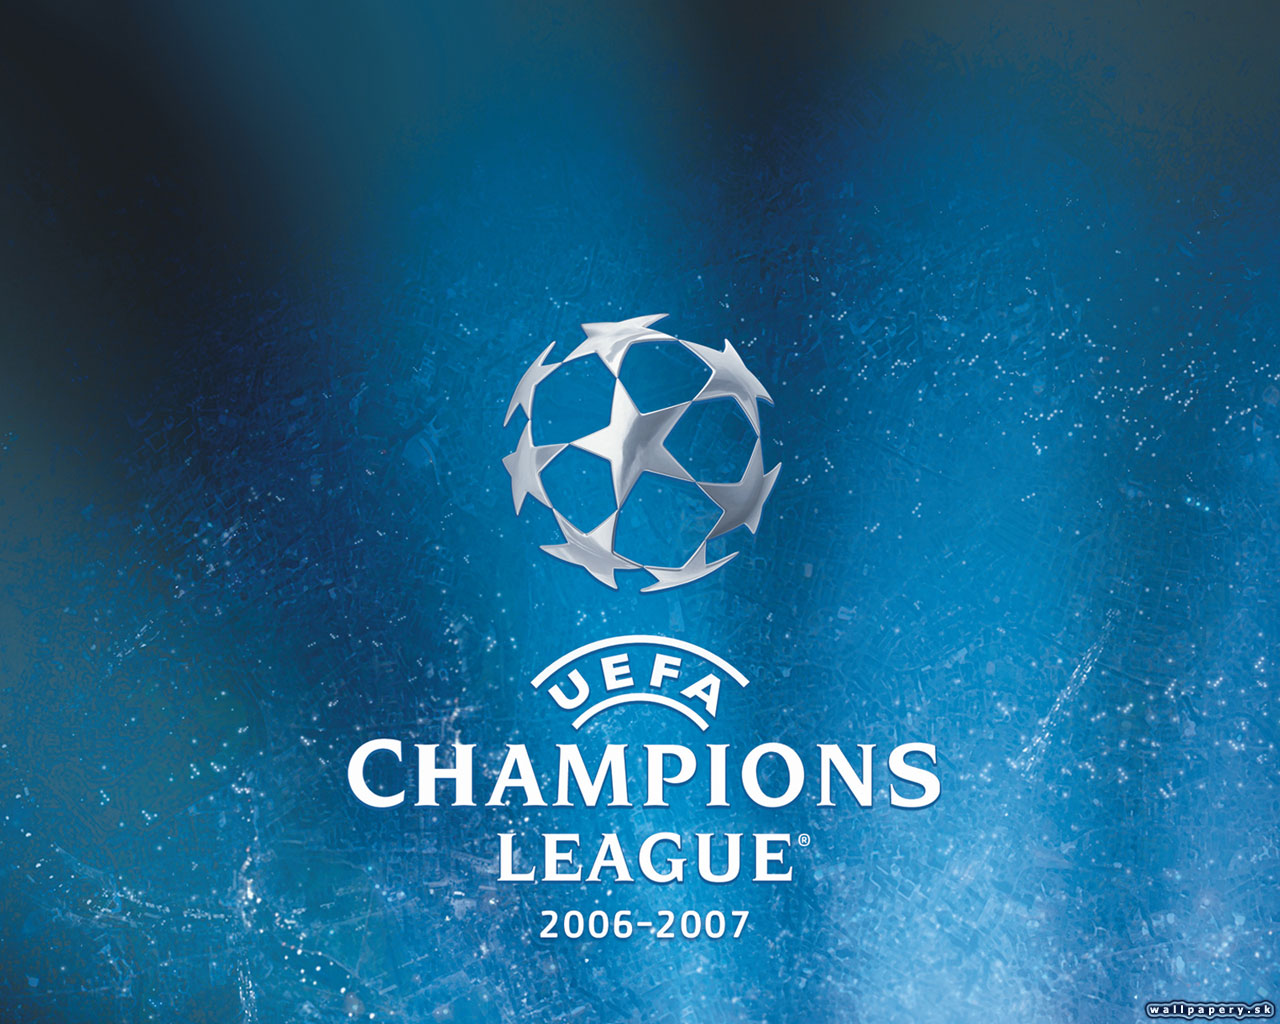 UEFA Champions League 2006-2007 - wallpaper 3